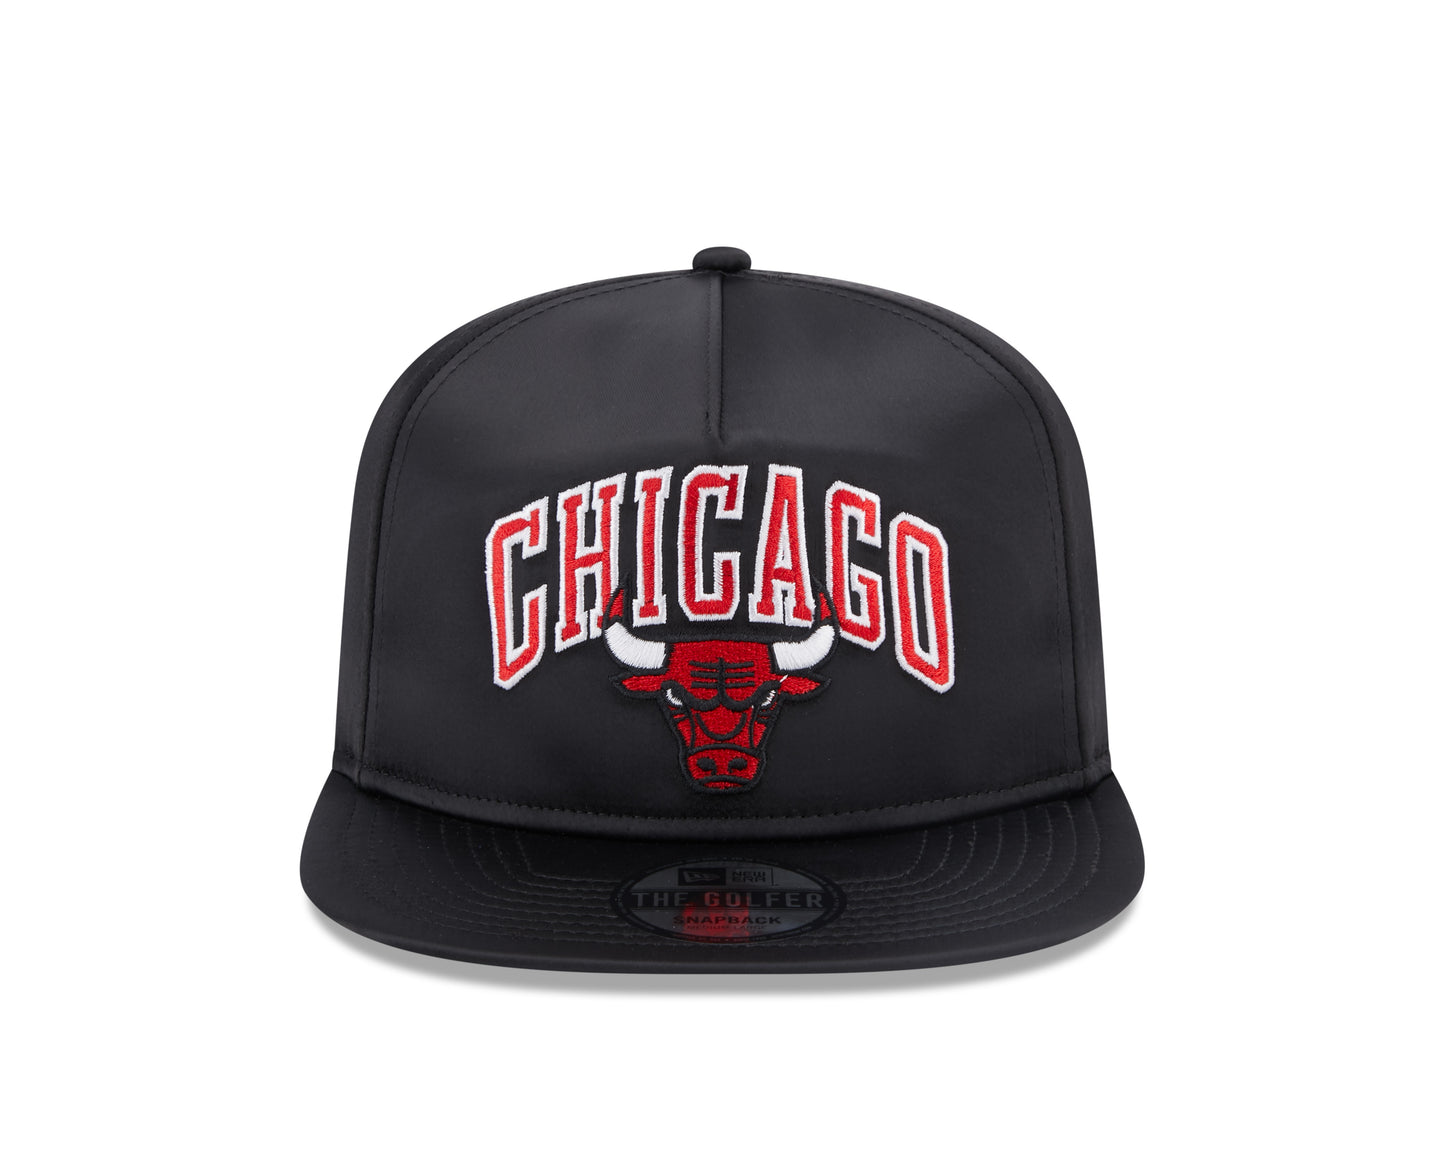 NEW ERA RETRO GOLFER CHICAGO BULLS BLACK CAP